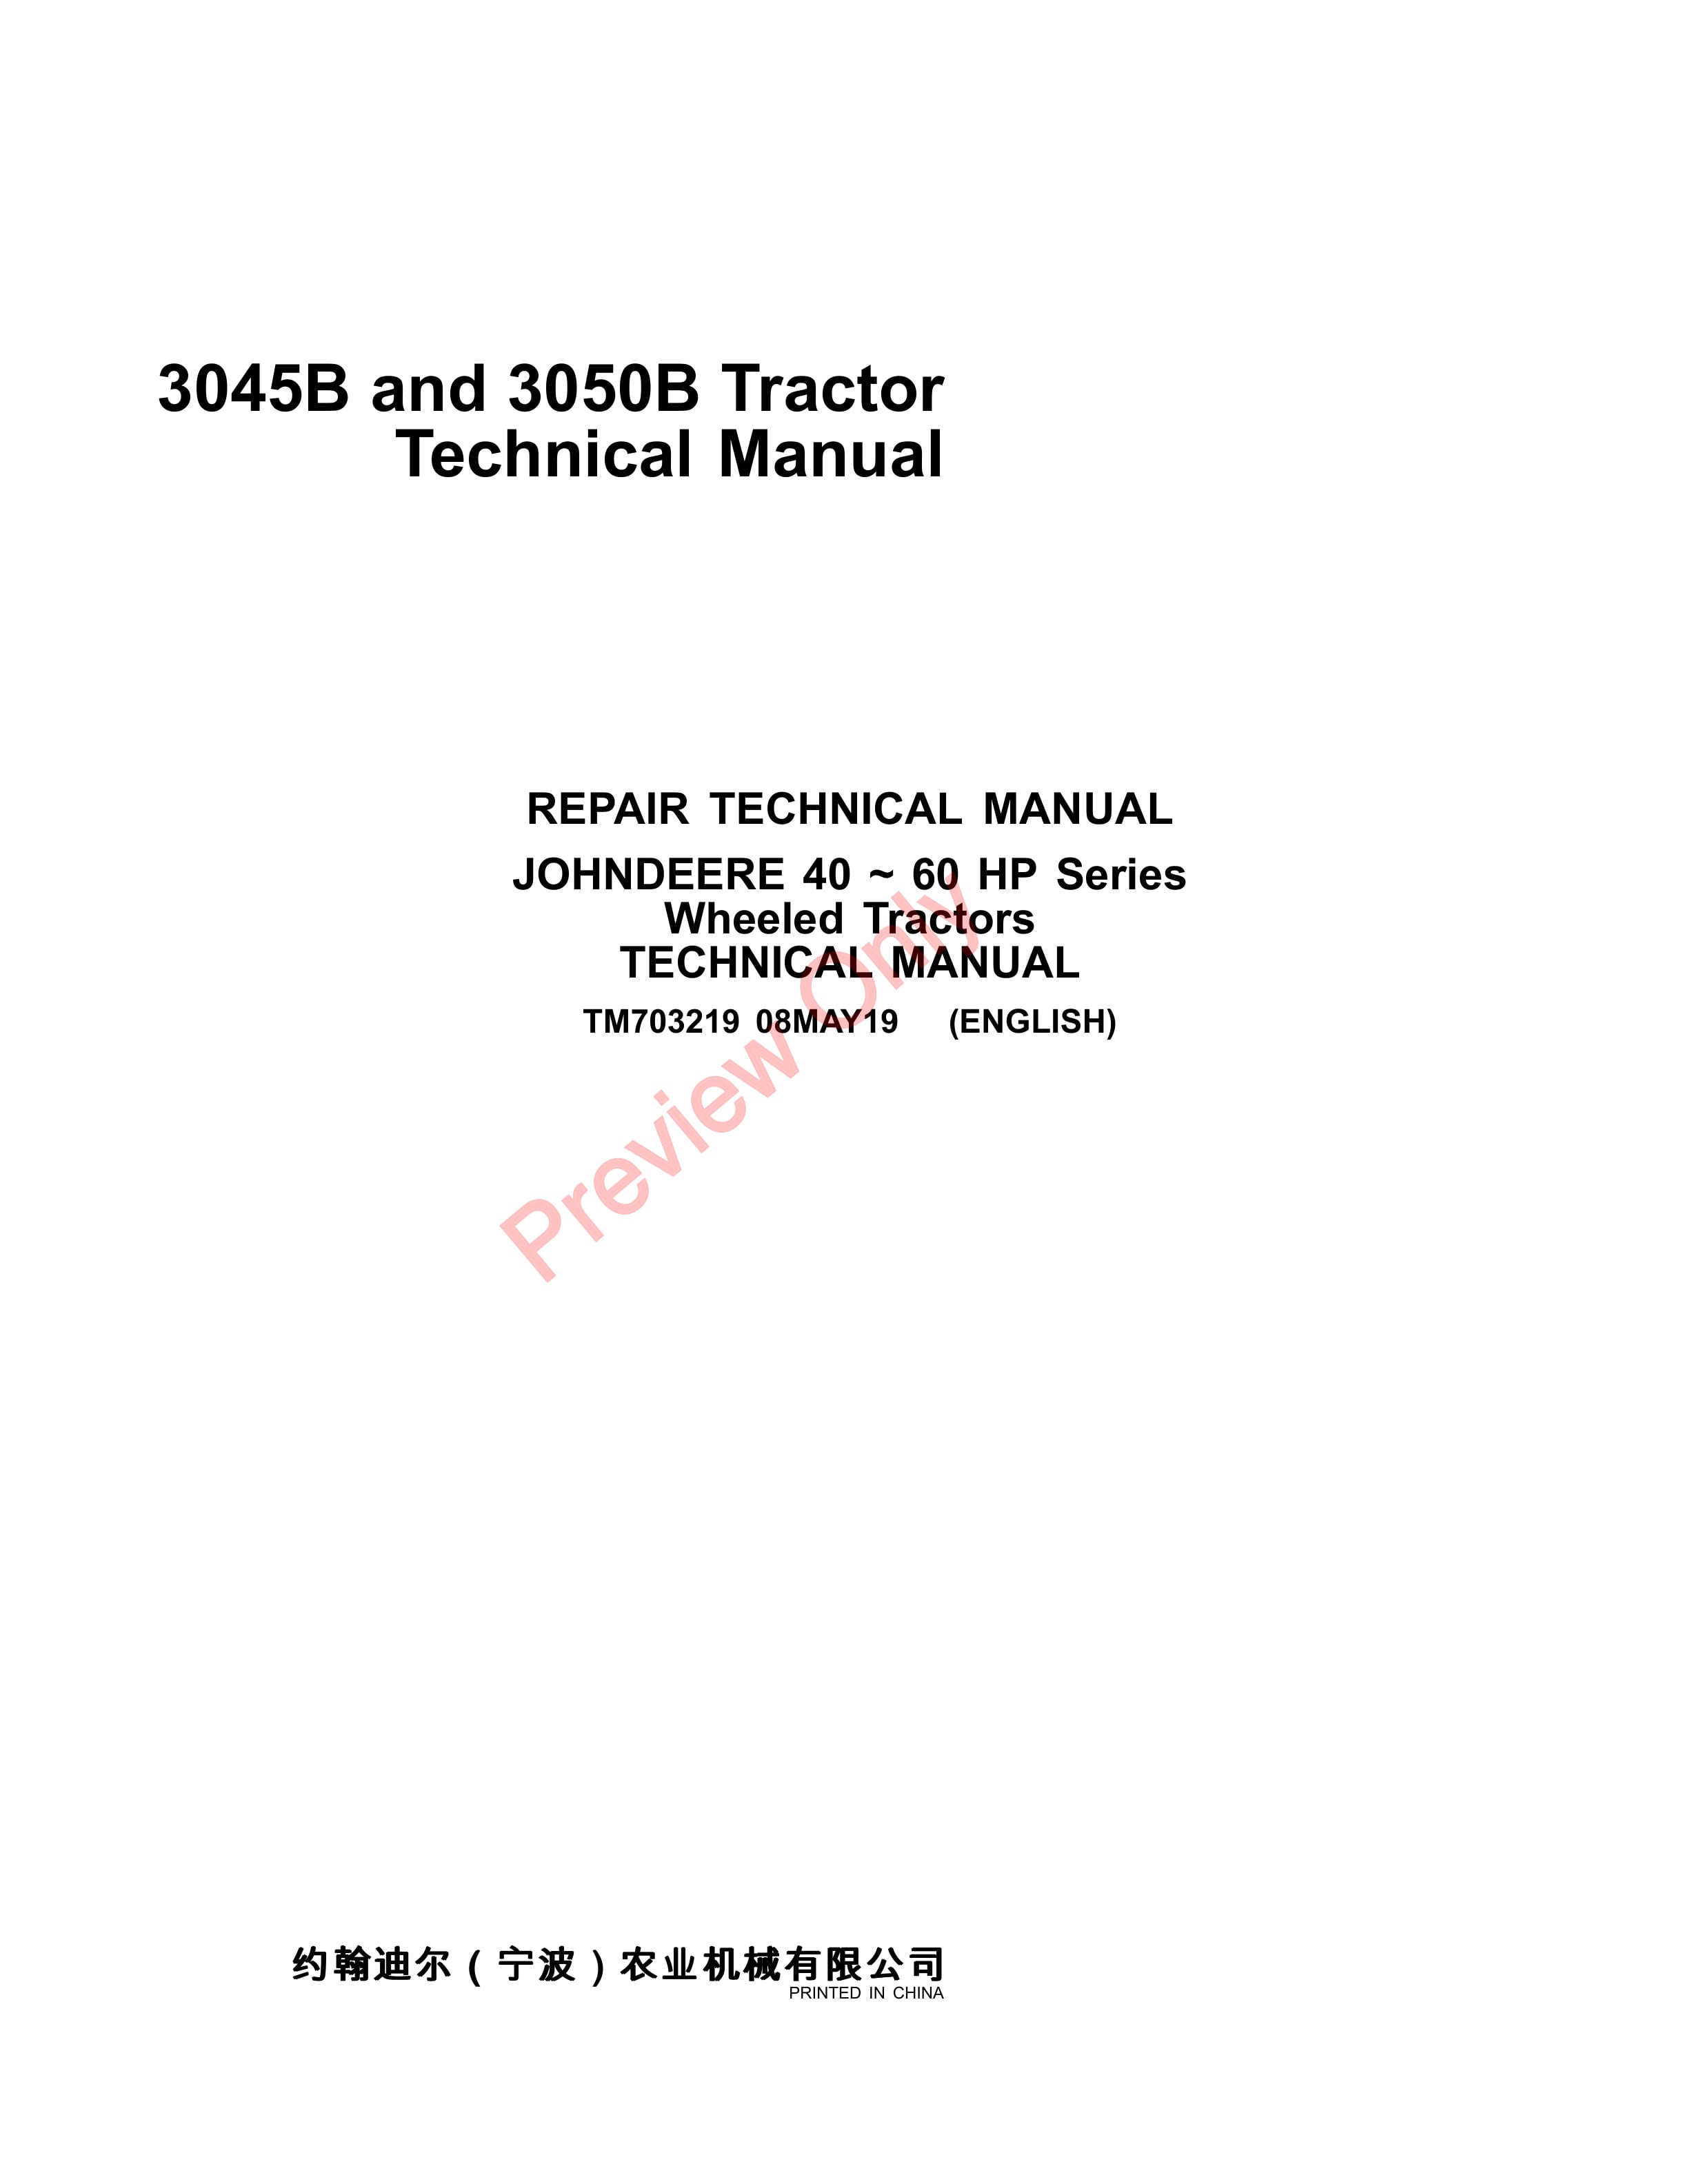 John Deere 3045B and 3050B Tractor Technical Manual TM703219 08MAY19 1